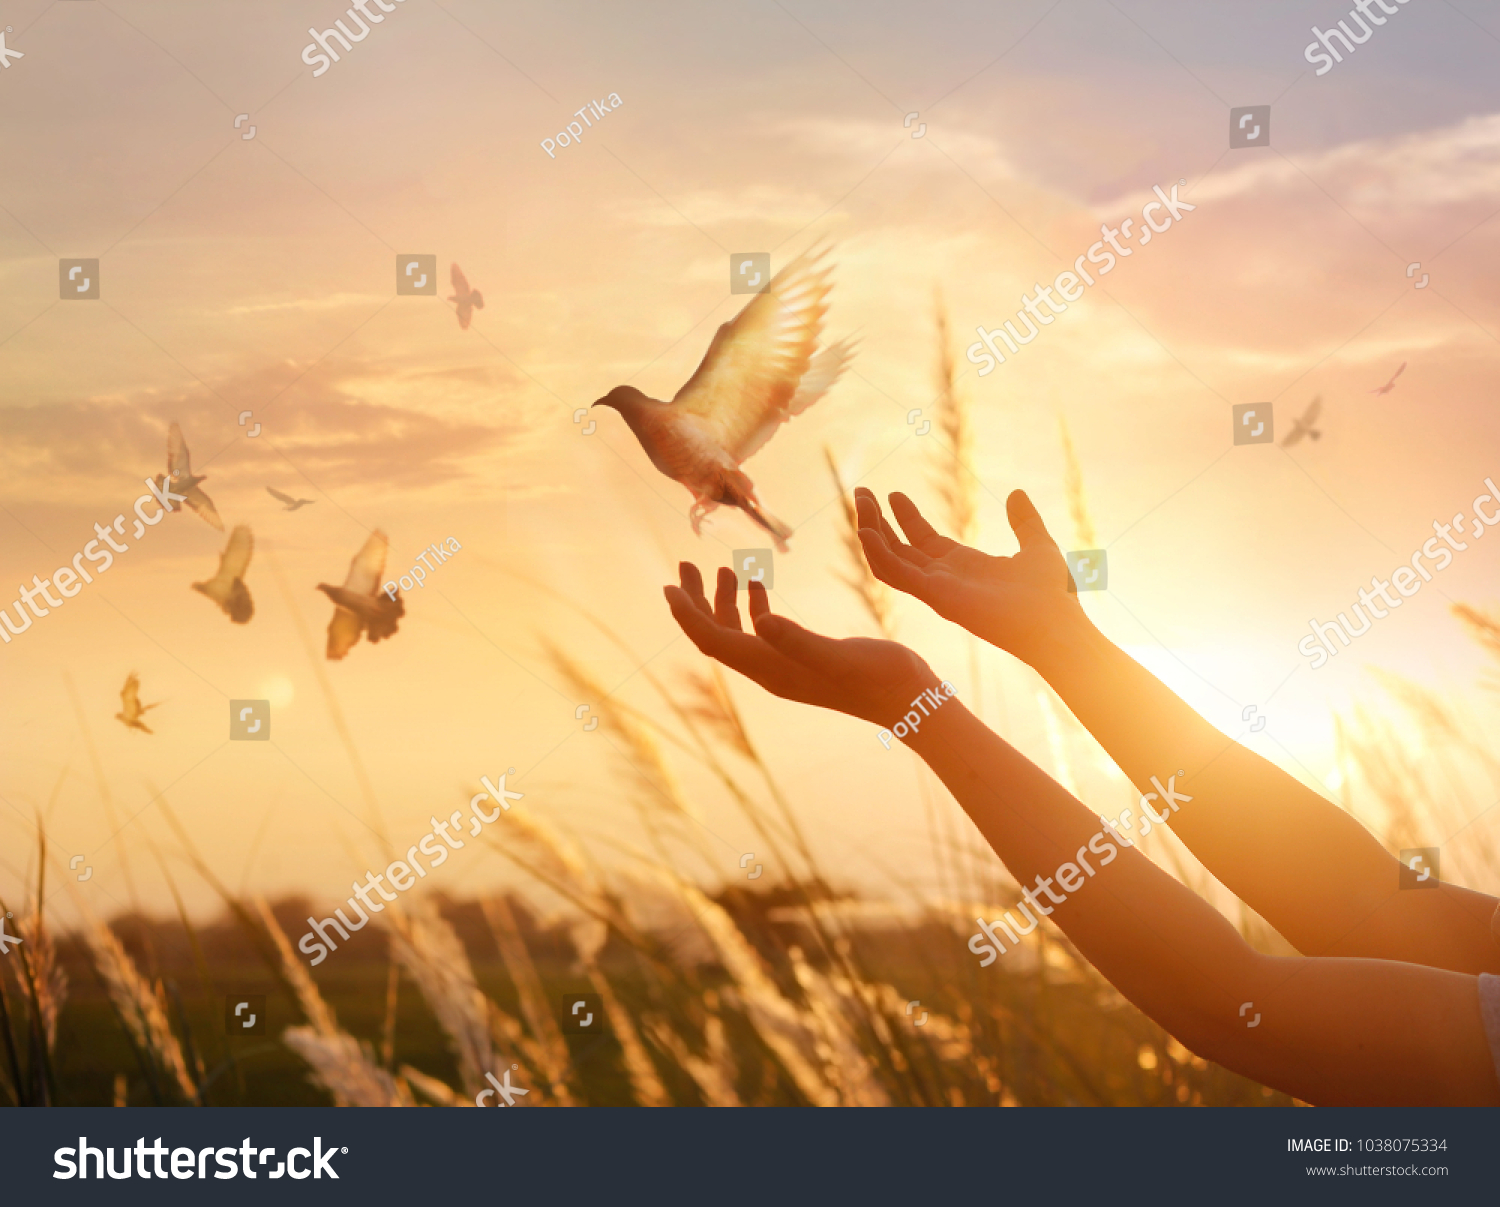 Woman praying and free bird enjoying nature on sunset background, hope concept  #1038075334